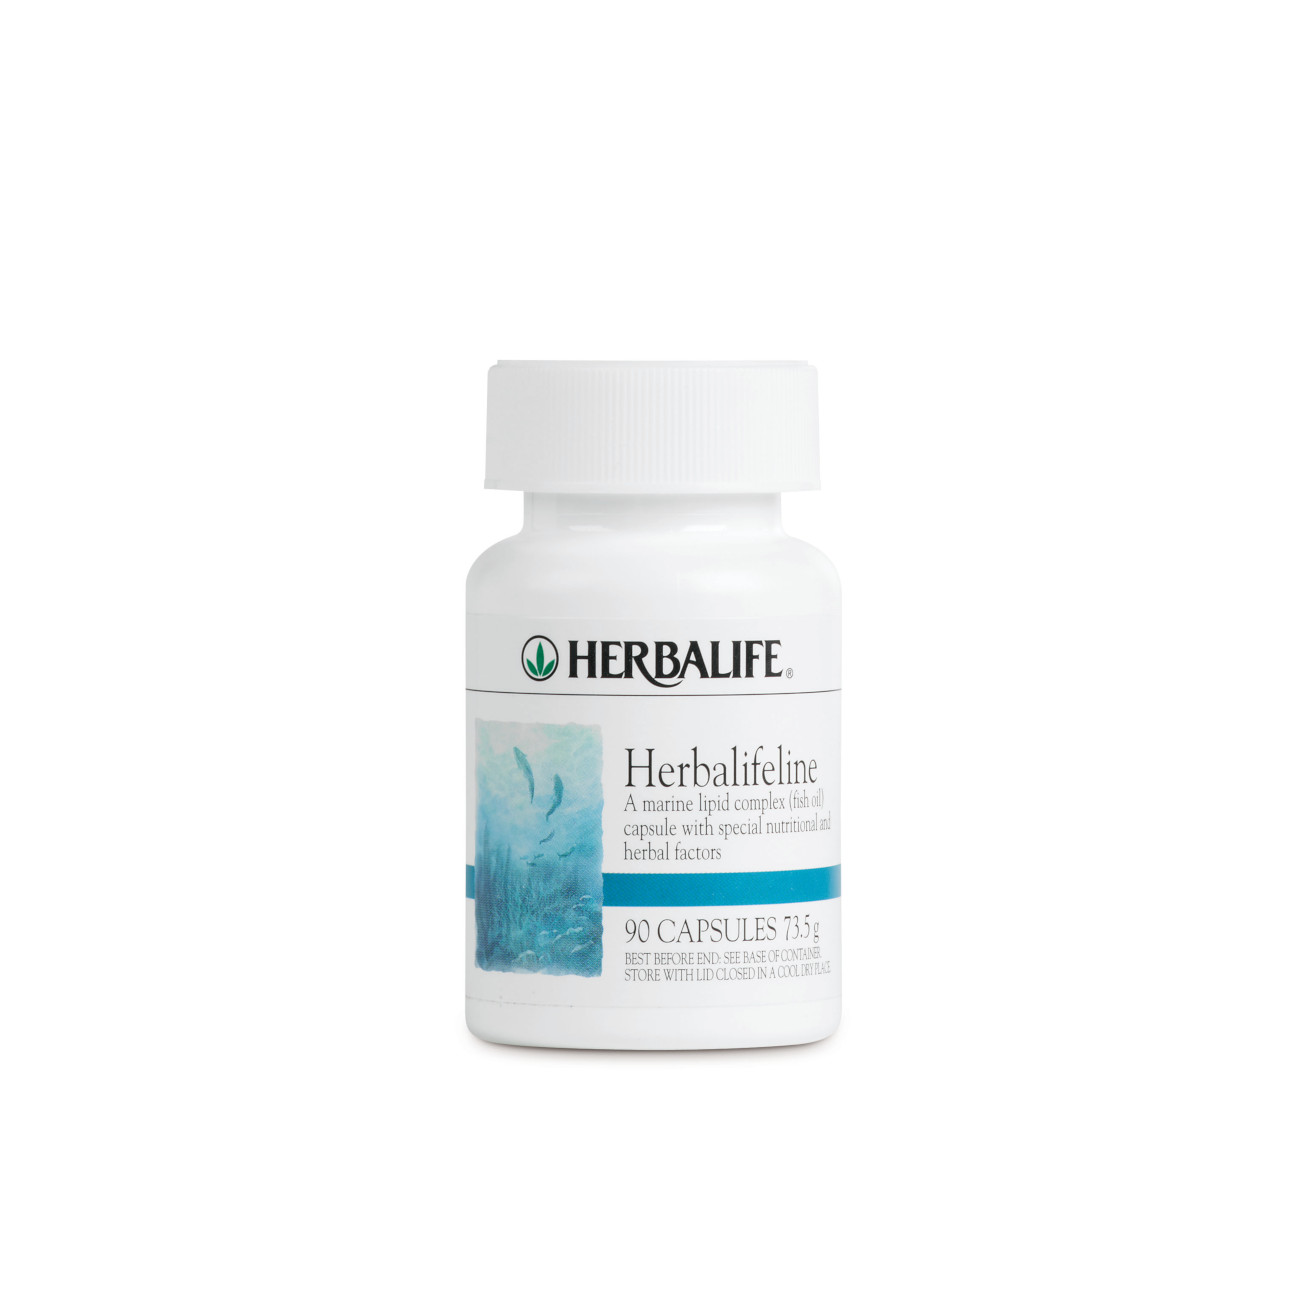 Herbalifeline®  product shot.